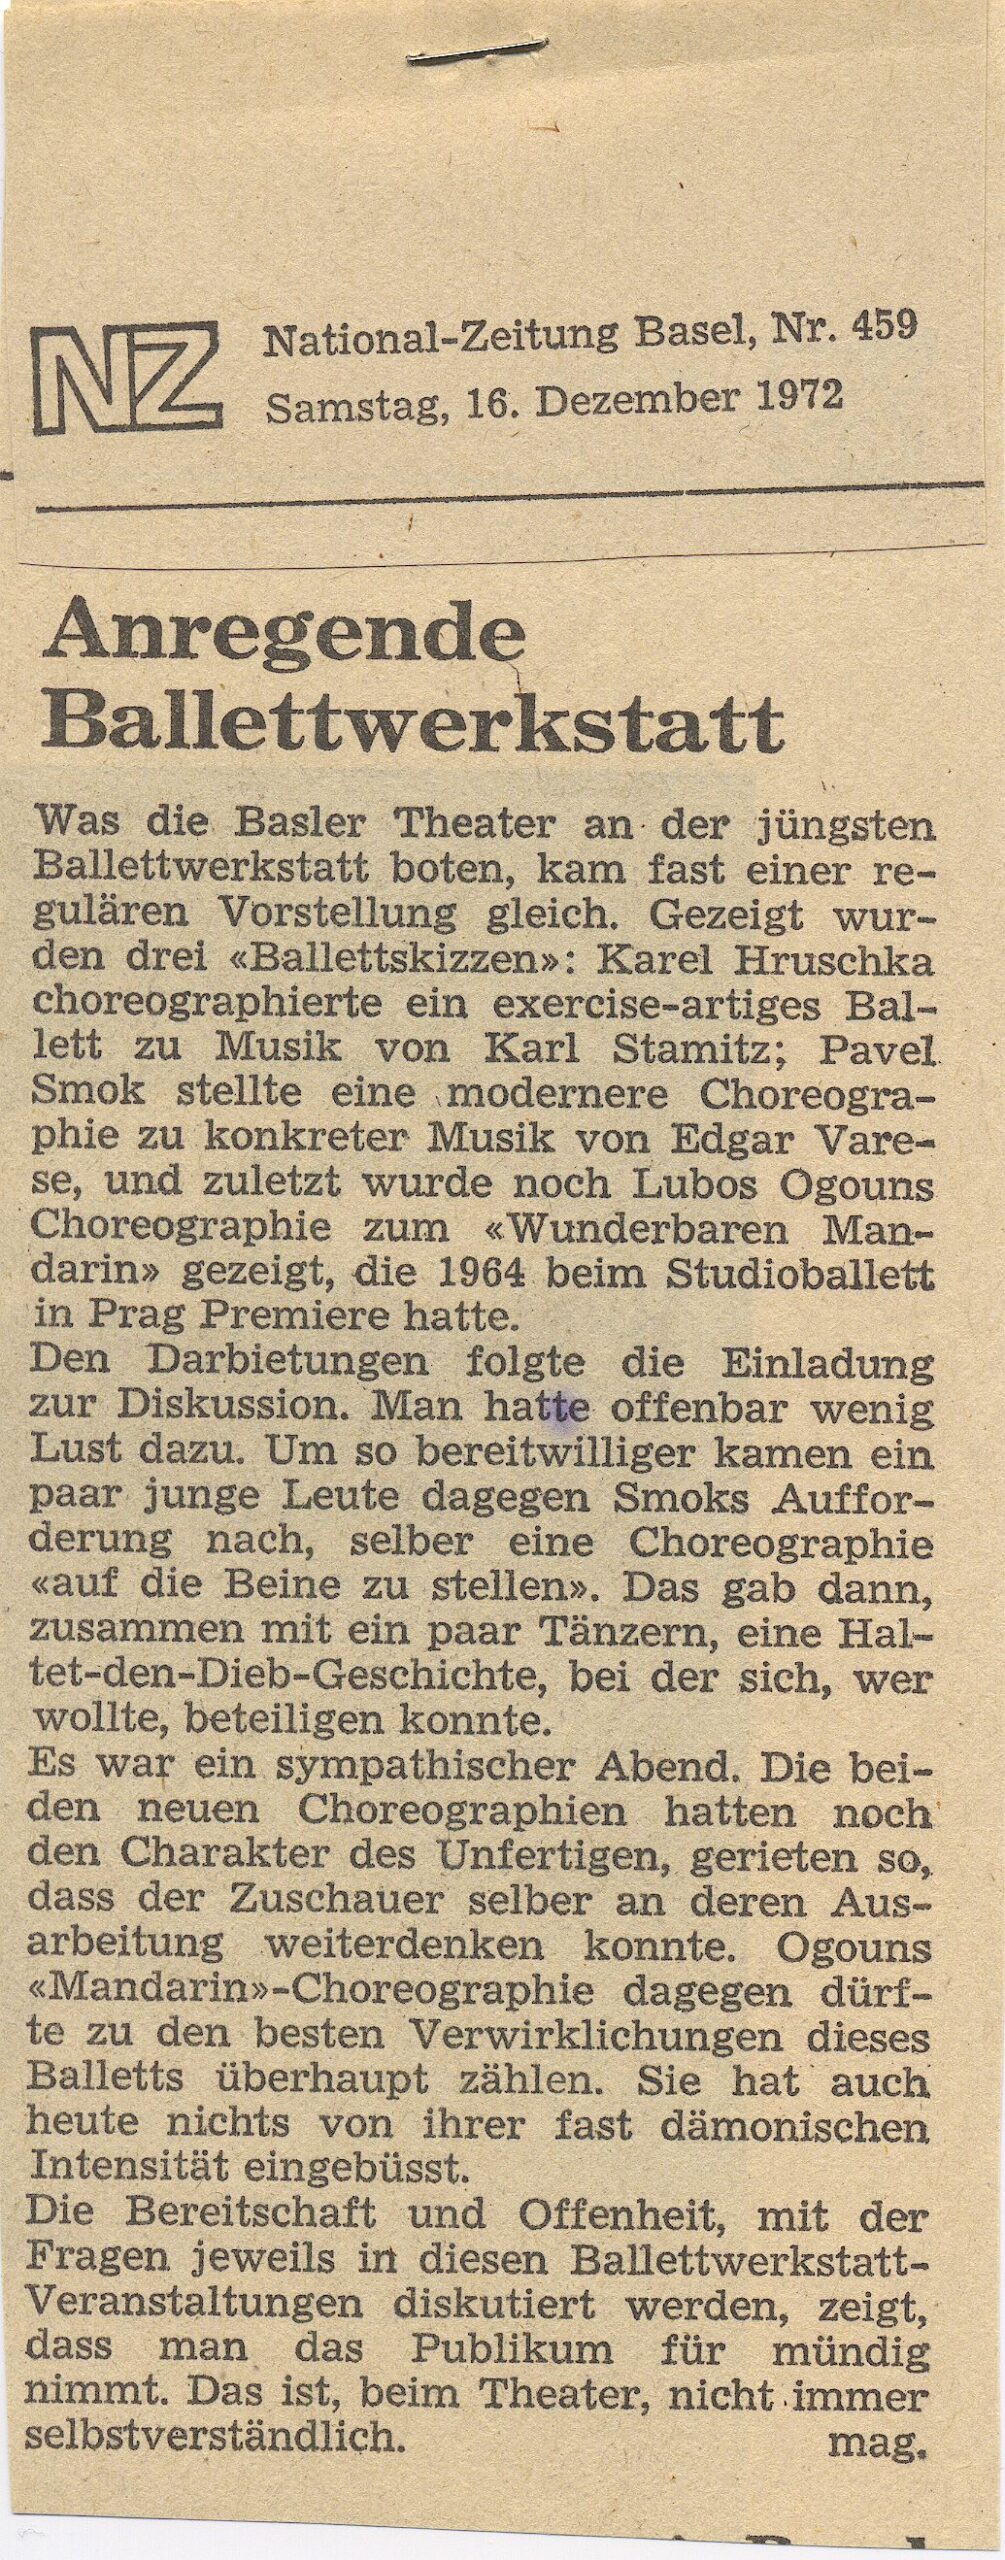 Recenze na pořad Ballettwerkstatt V (archiv IPŠ)